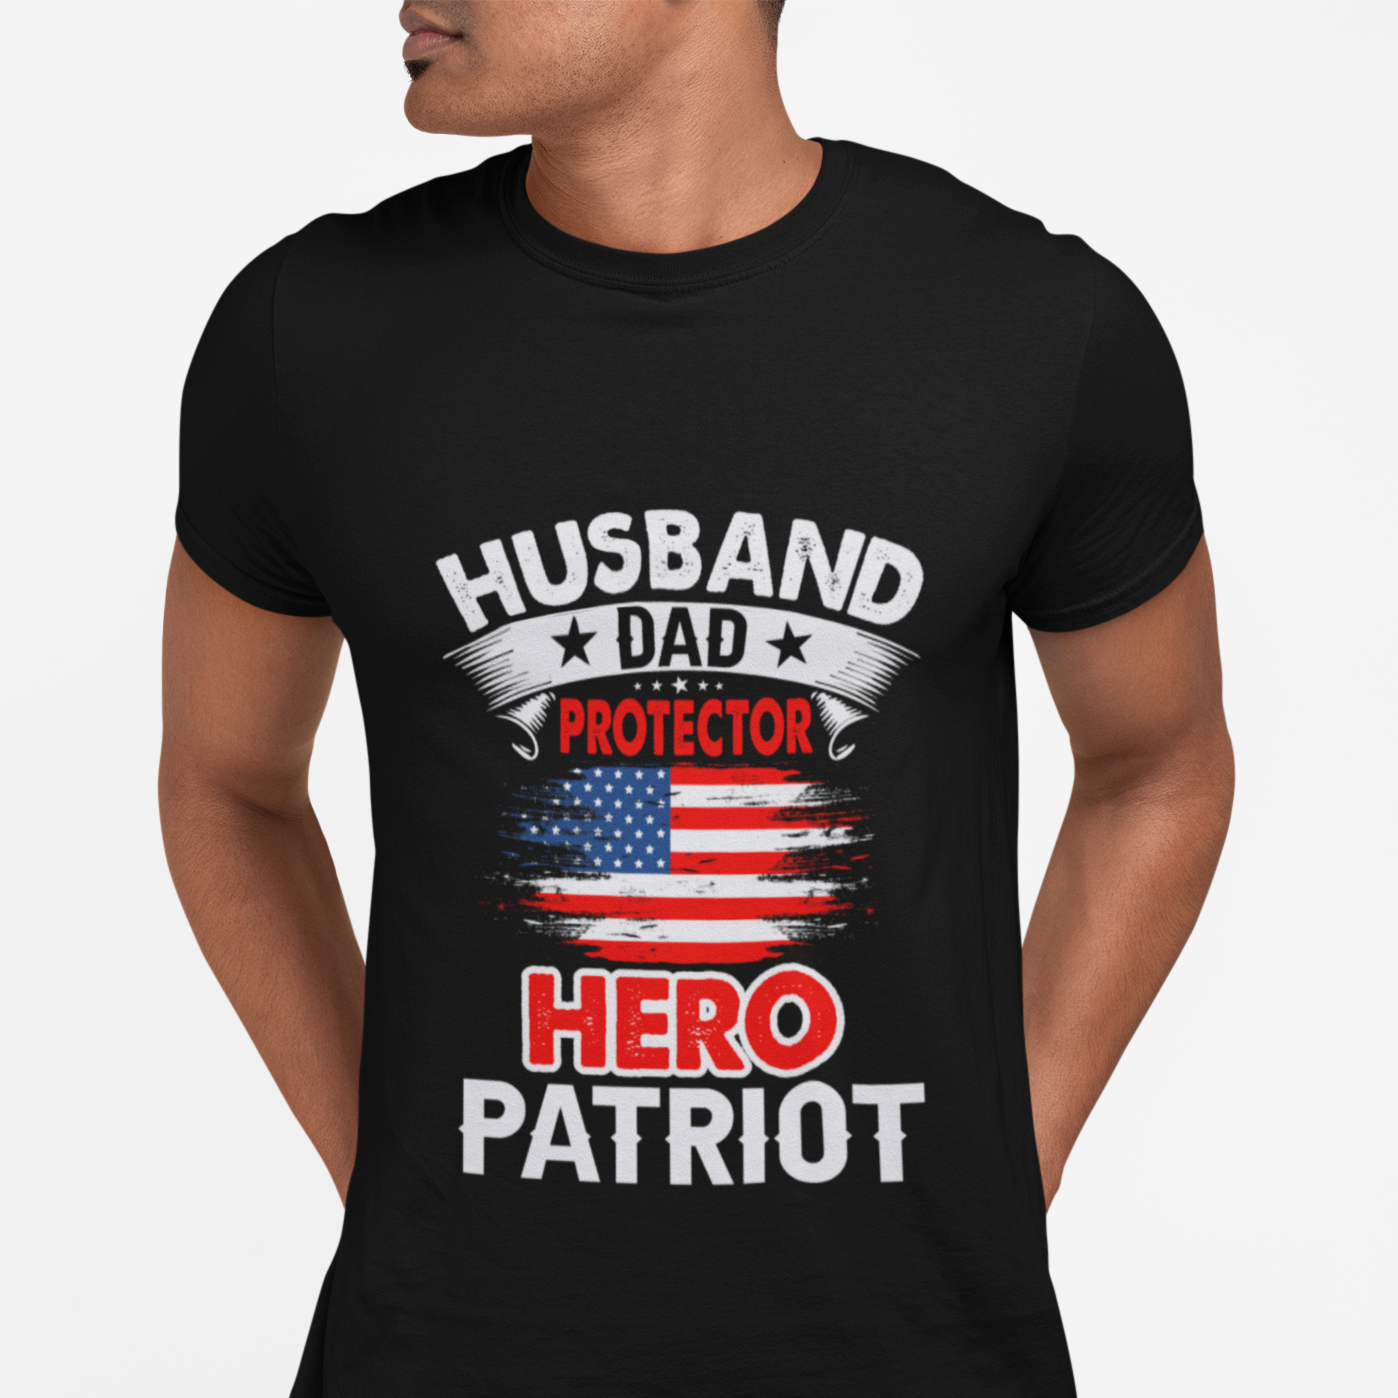 Husband, Dad, Protector, Hero, Patriot Short Sleeve Tee